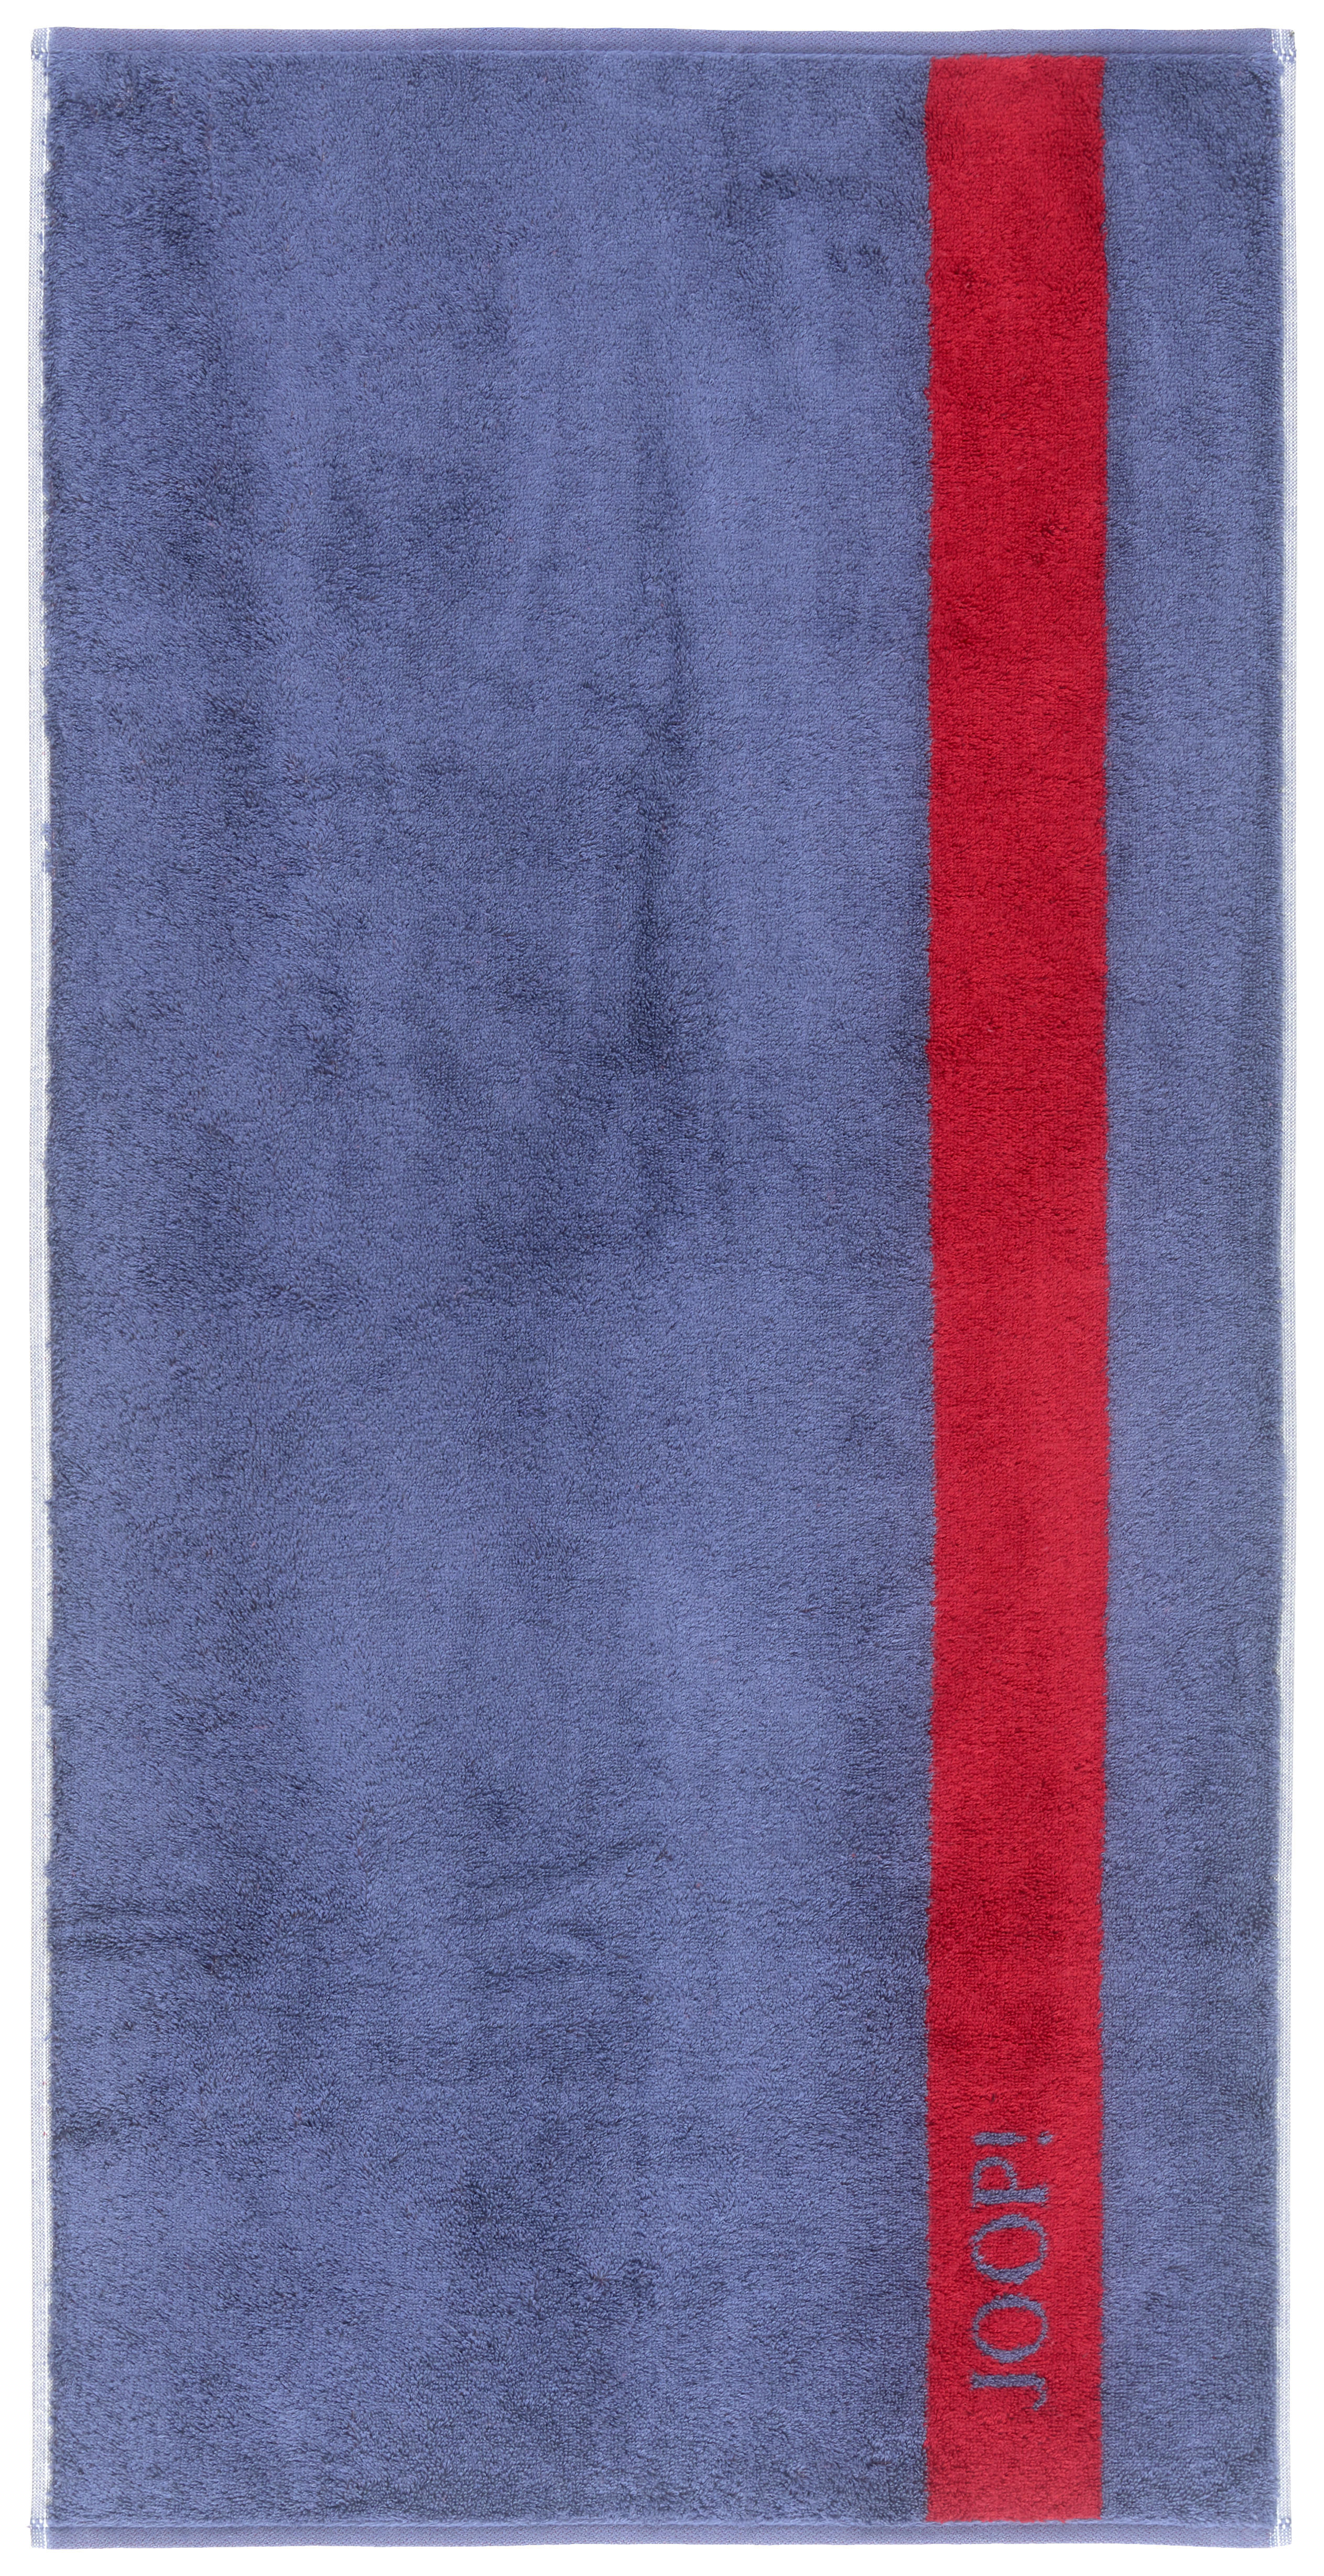 HANDTUCH Infinity Doubleface  - Blau/Rot, Basics, Textil (50/100cm) - Joop!